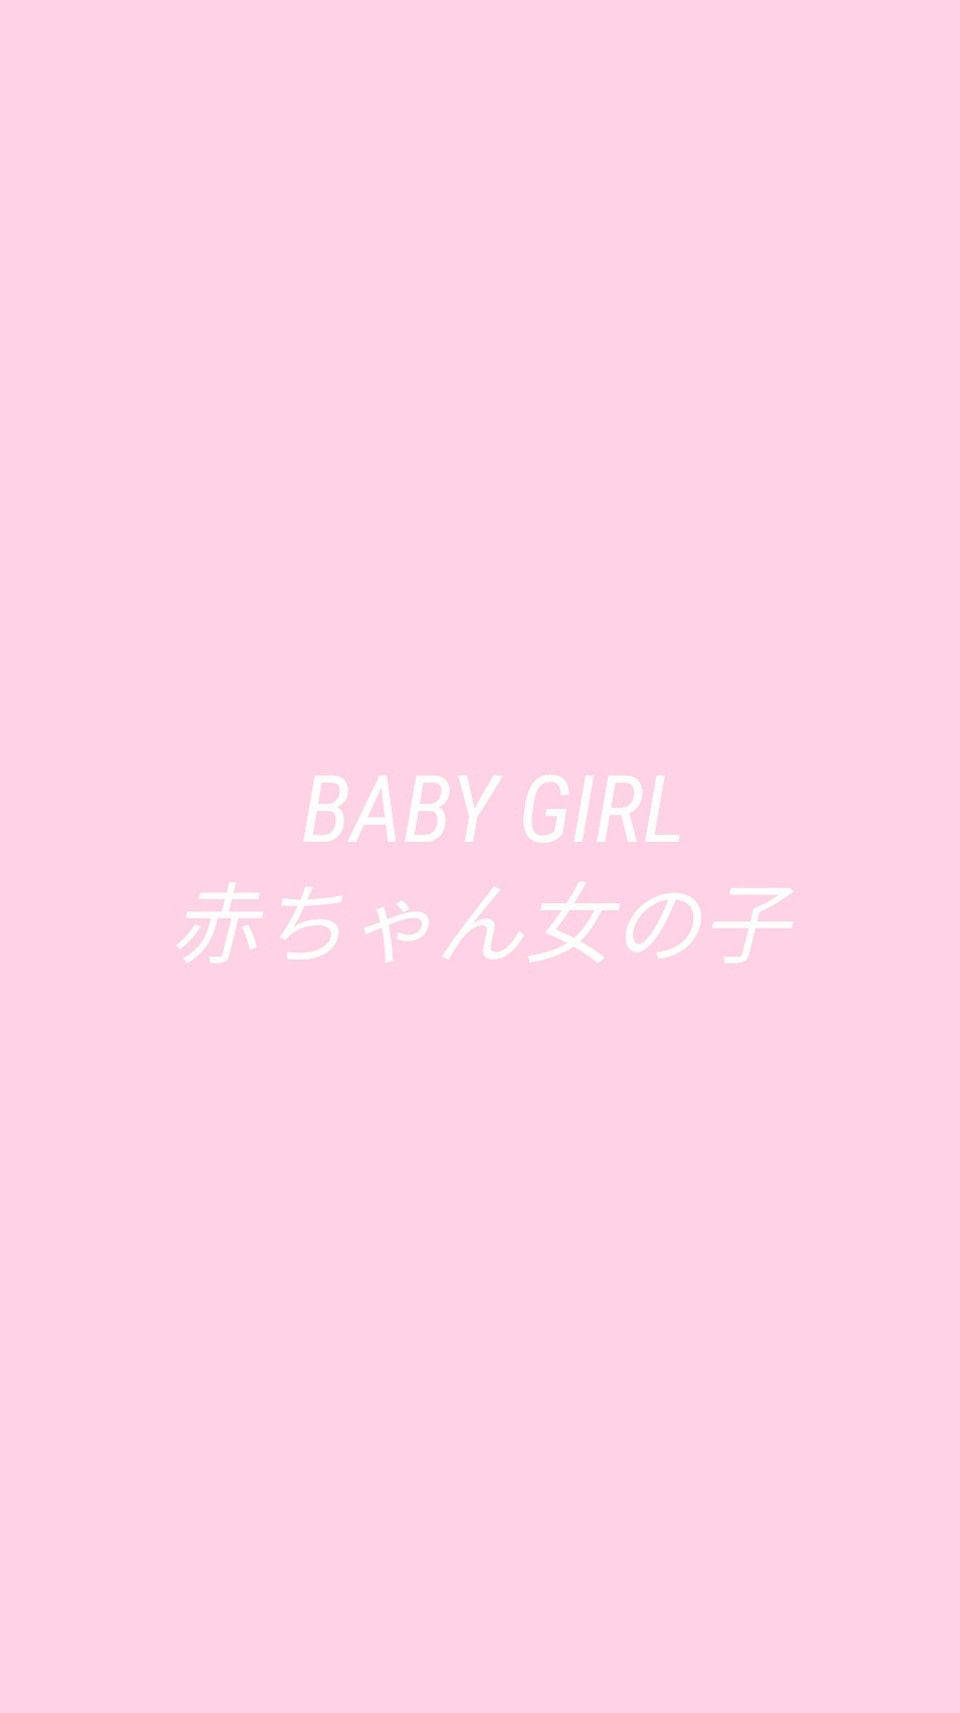 Cute Pink Aesthetic Japanese Baby Girl Wallpaper